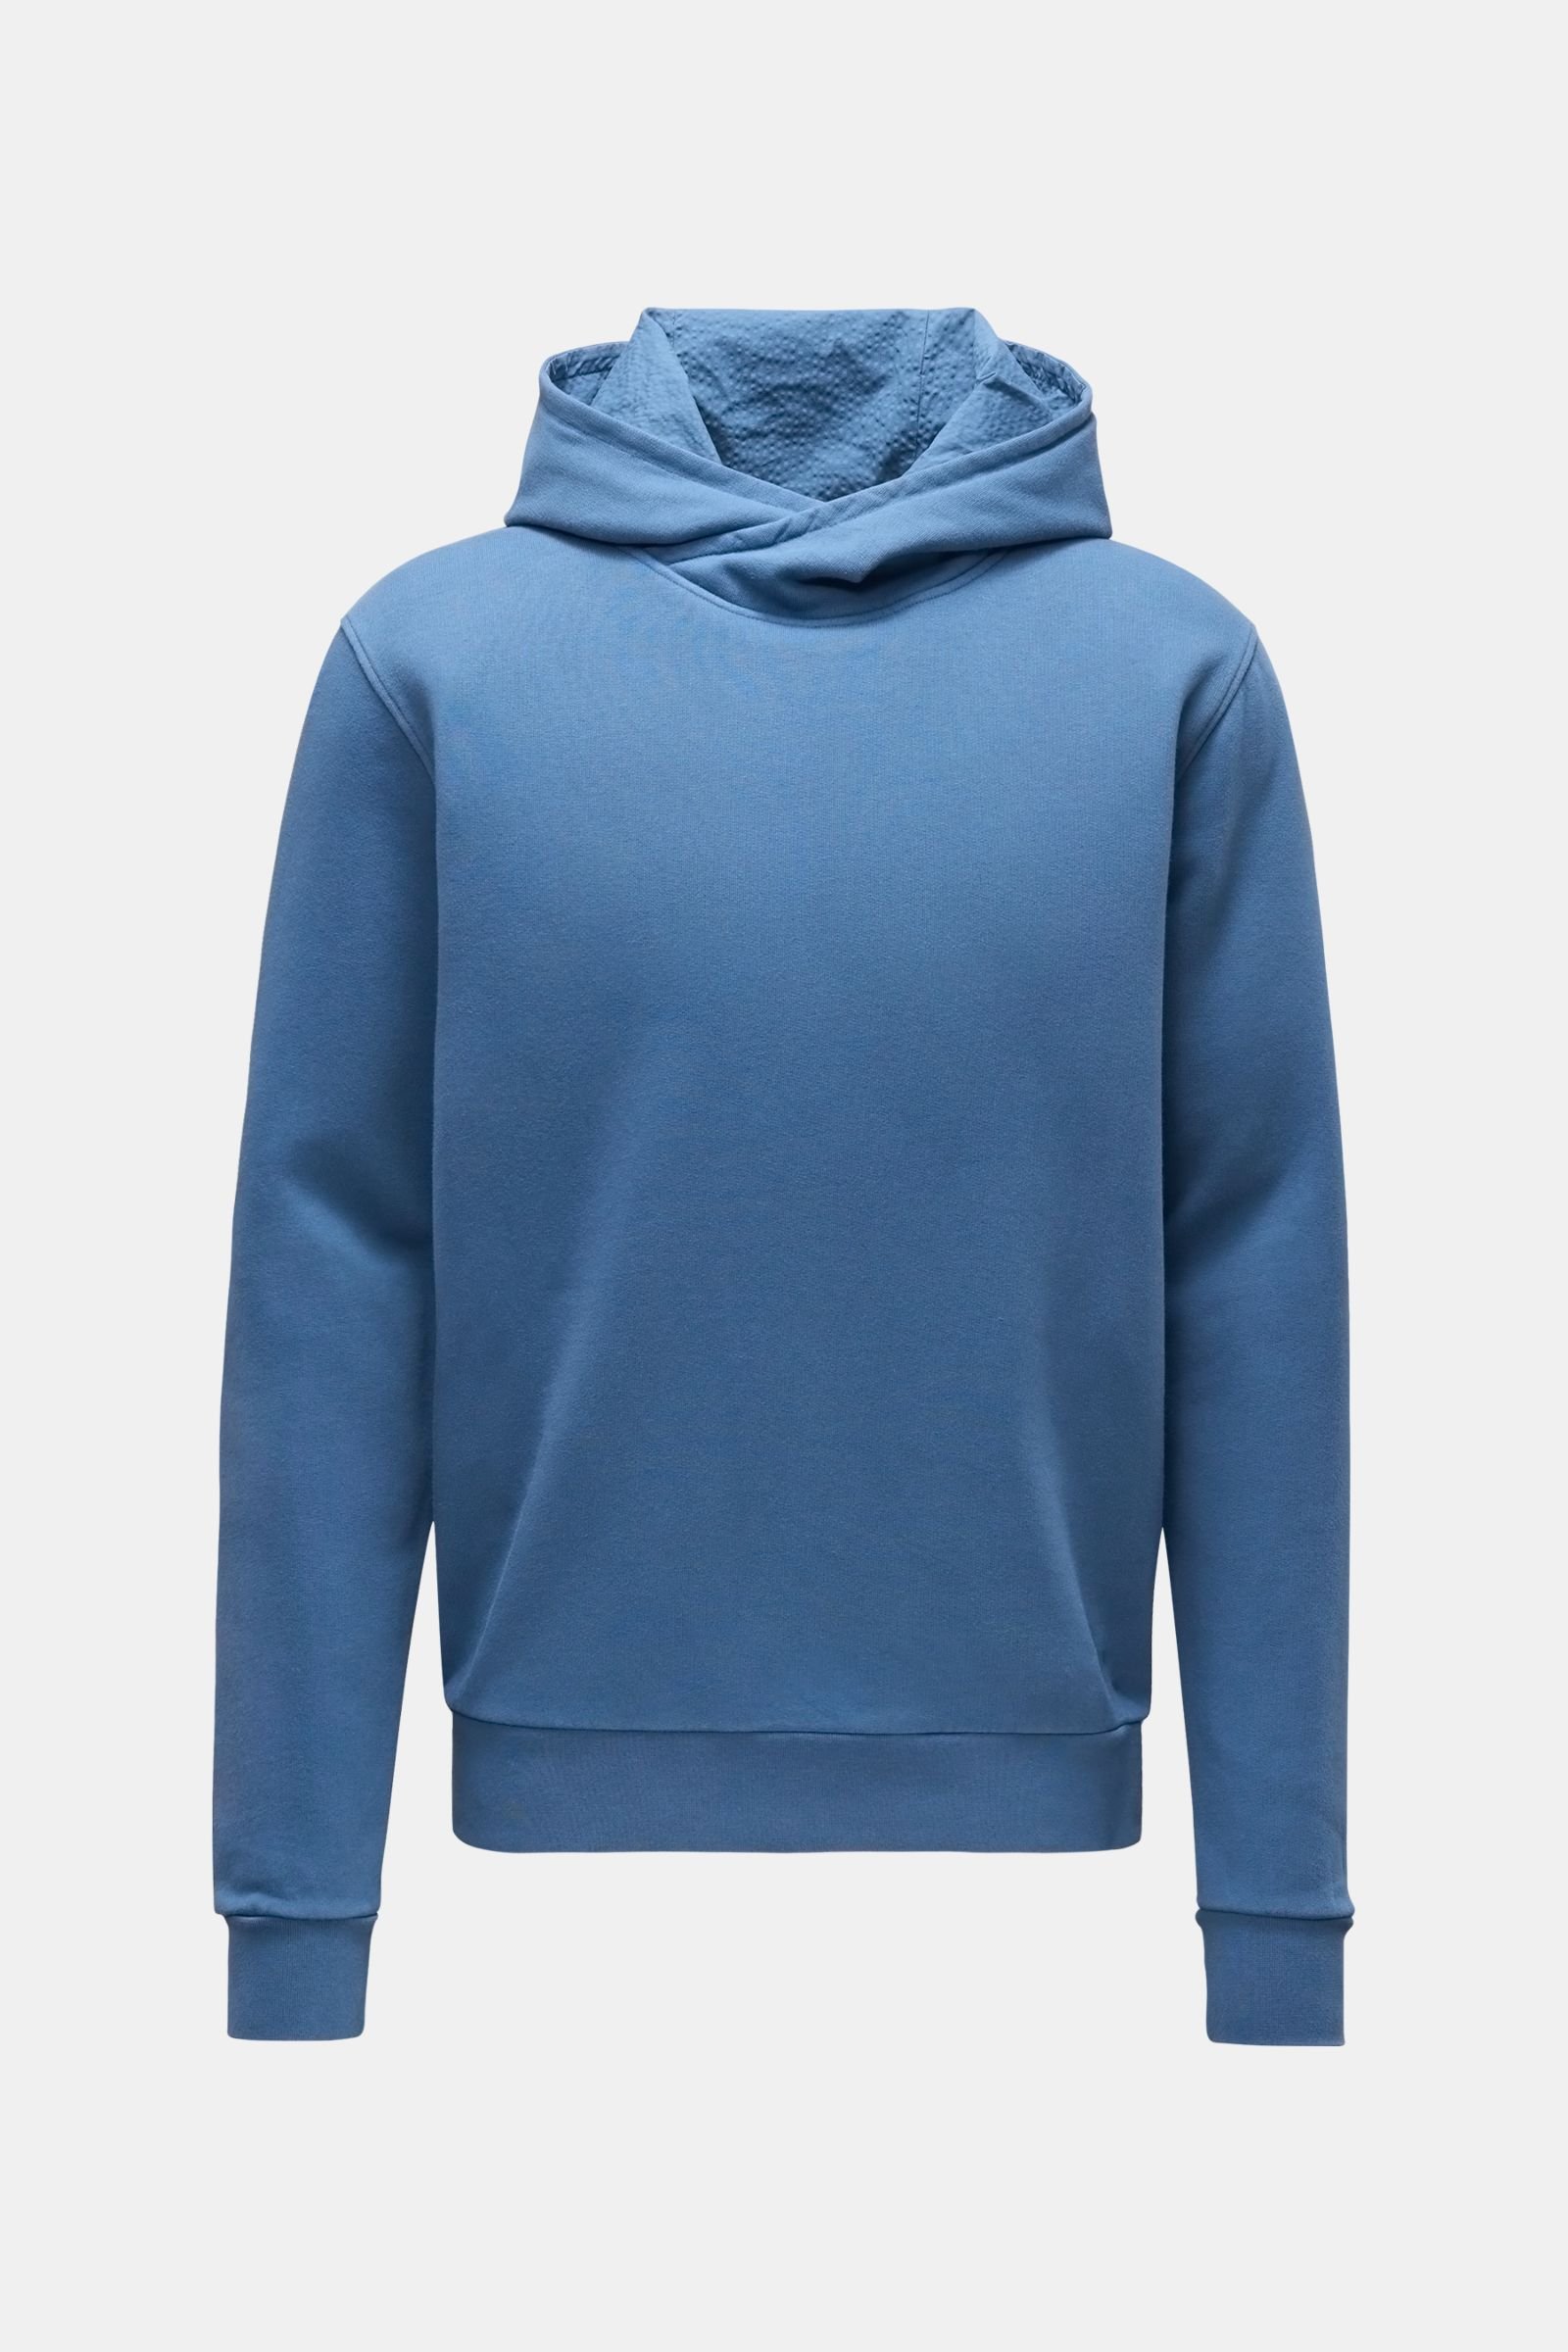 Hooded jumper 'AF Hoody' grey-blue